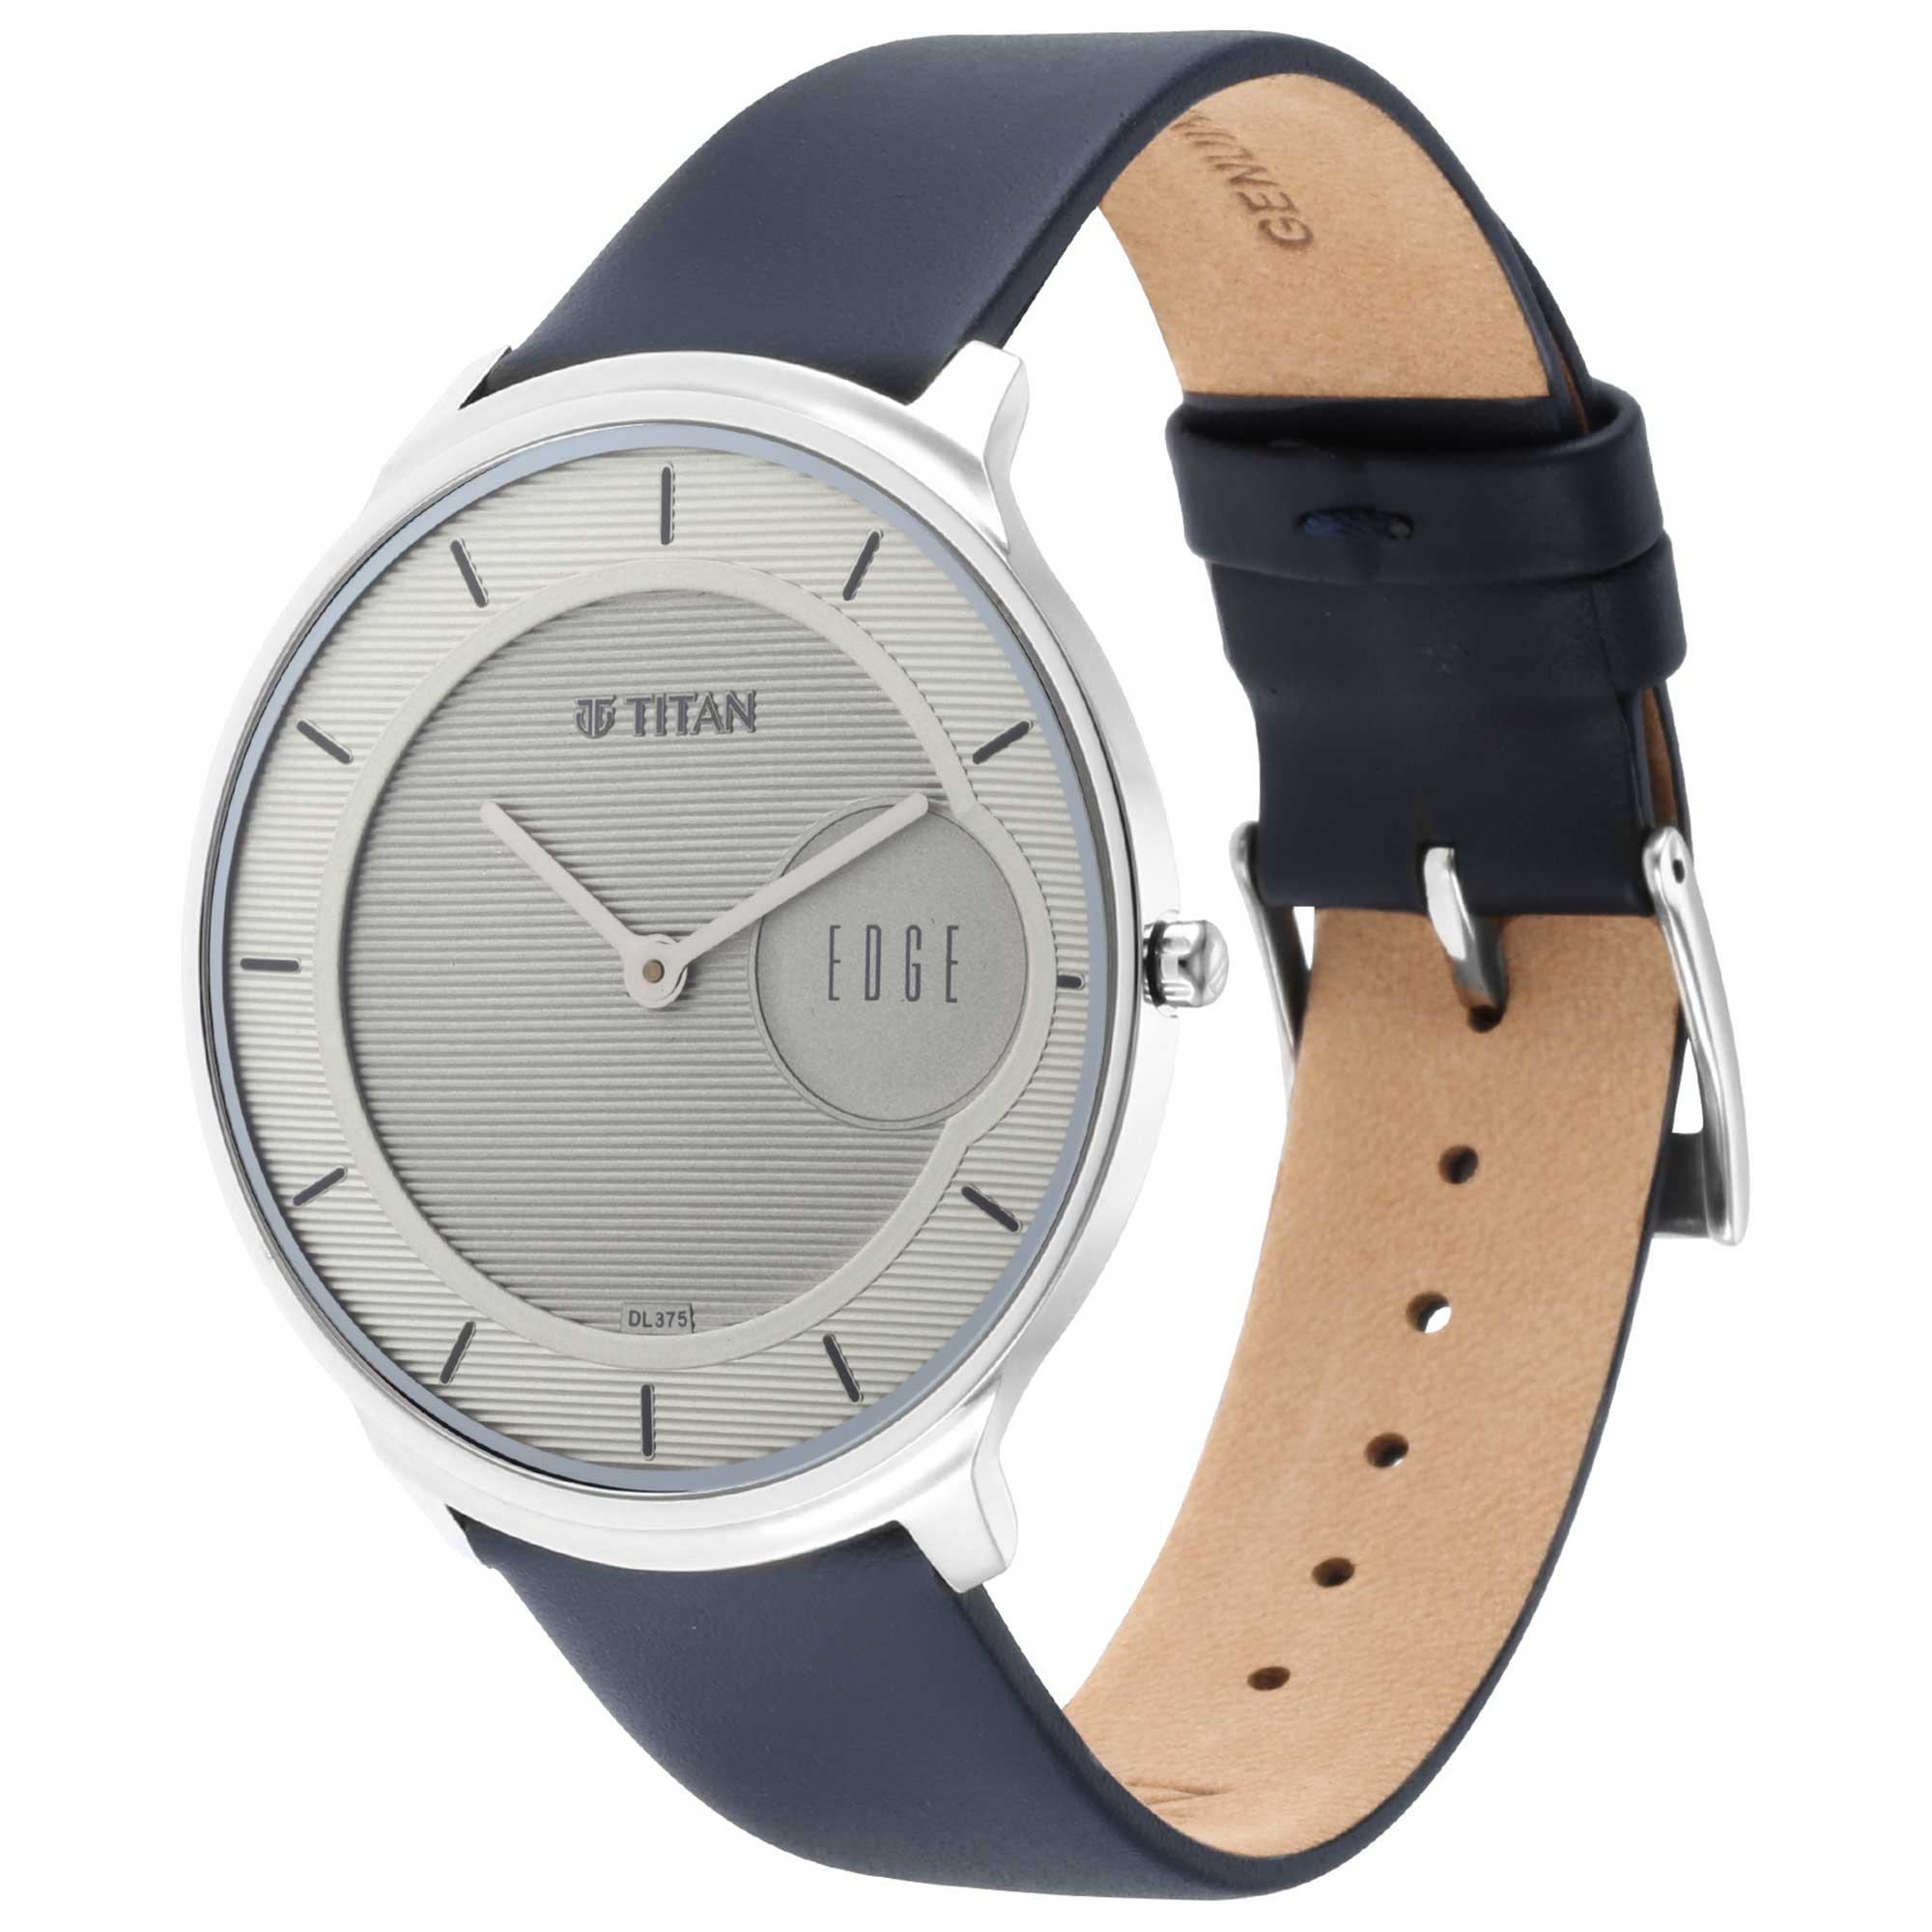 Titan Edge Baseline Grey Dial Analog Leather Strap watch for Men